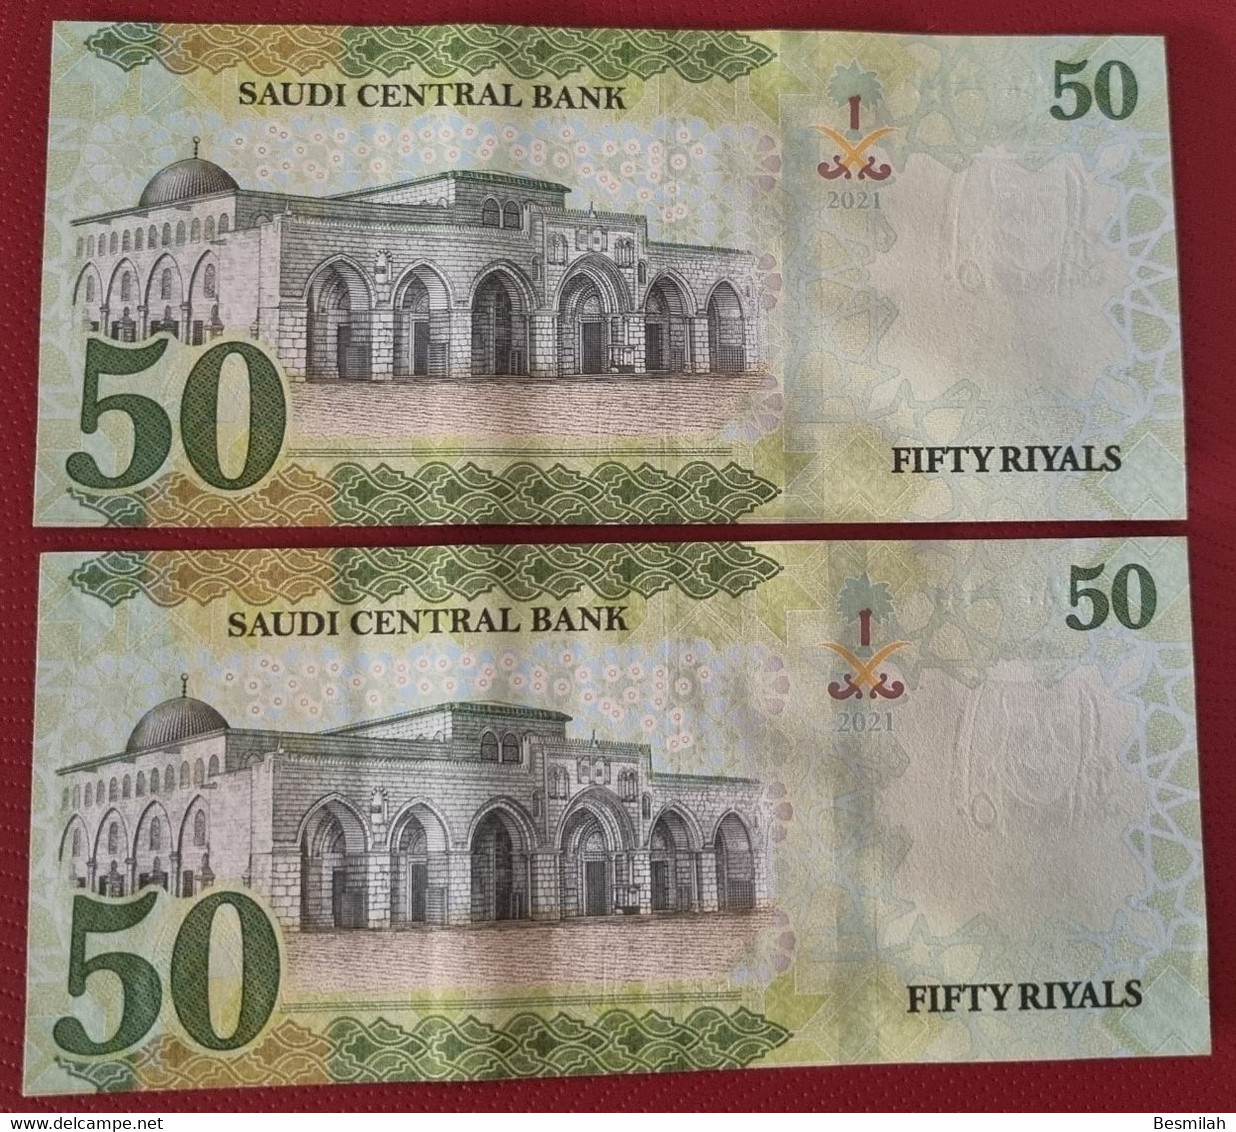 Saudi Arabia 50 Riyals 2021 (1442 Hijry) P-40 C UNC Two Notes From A Bundle New Name Saudi Central Bank - Saudi Arabia